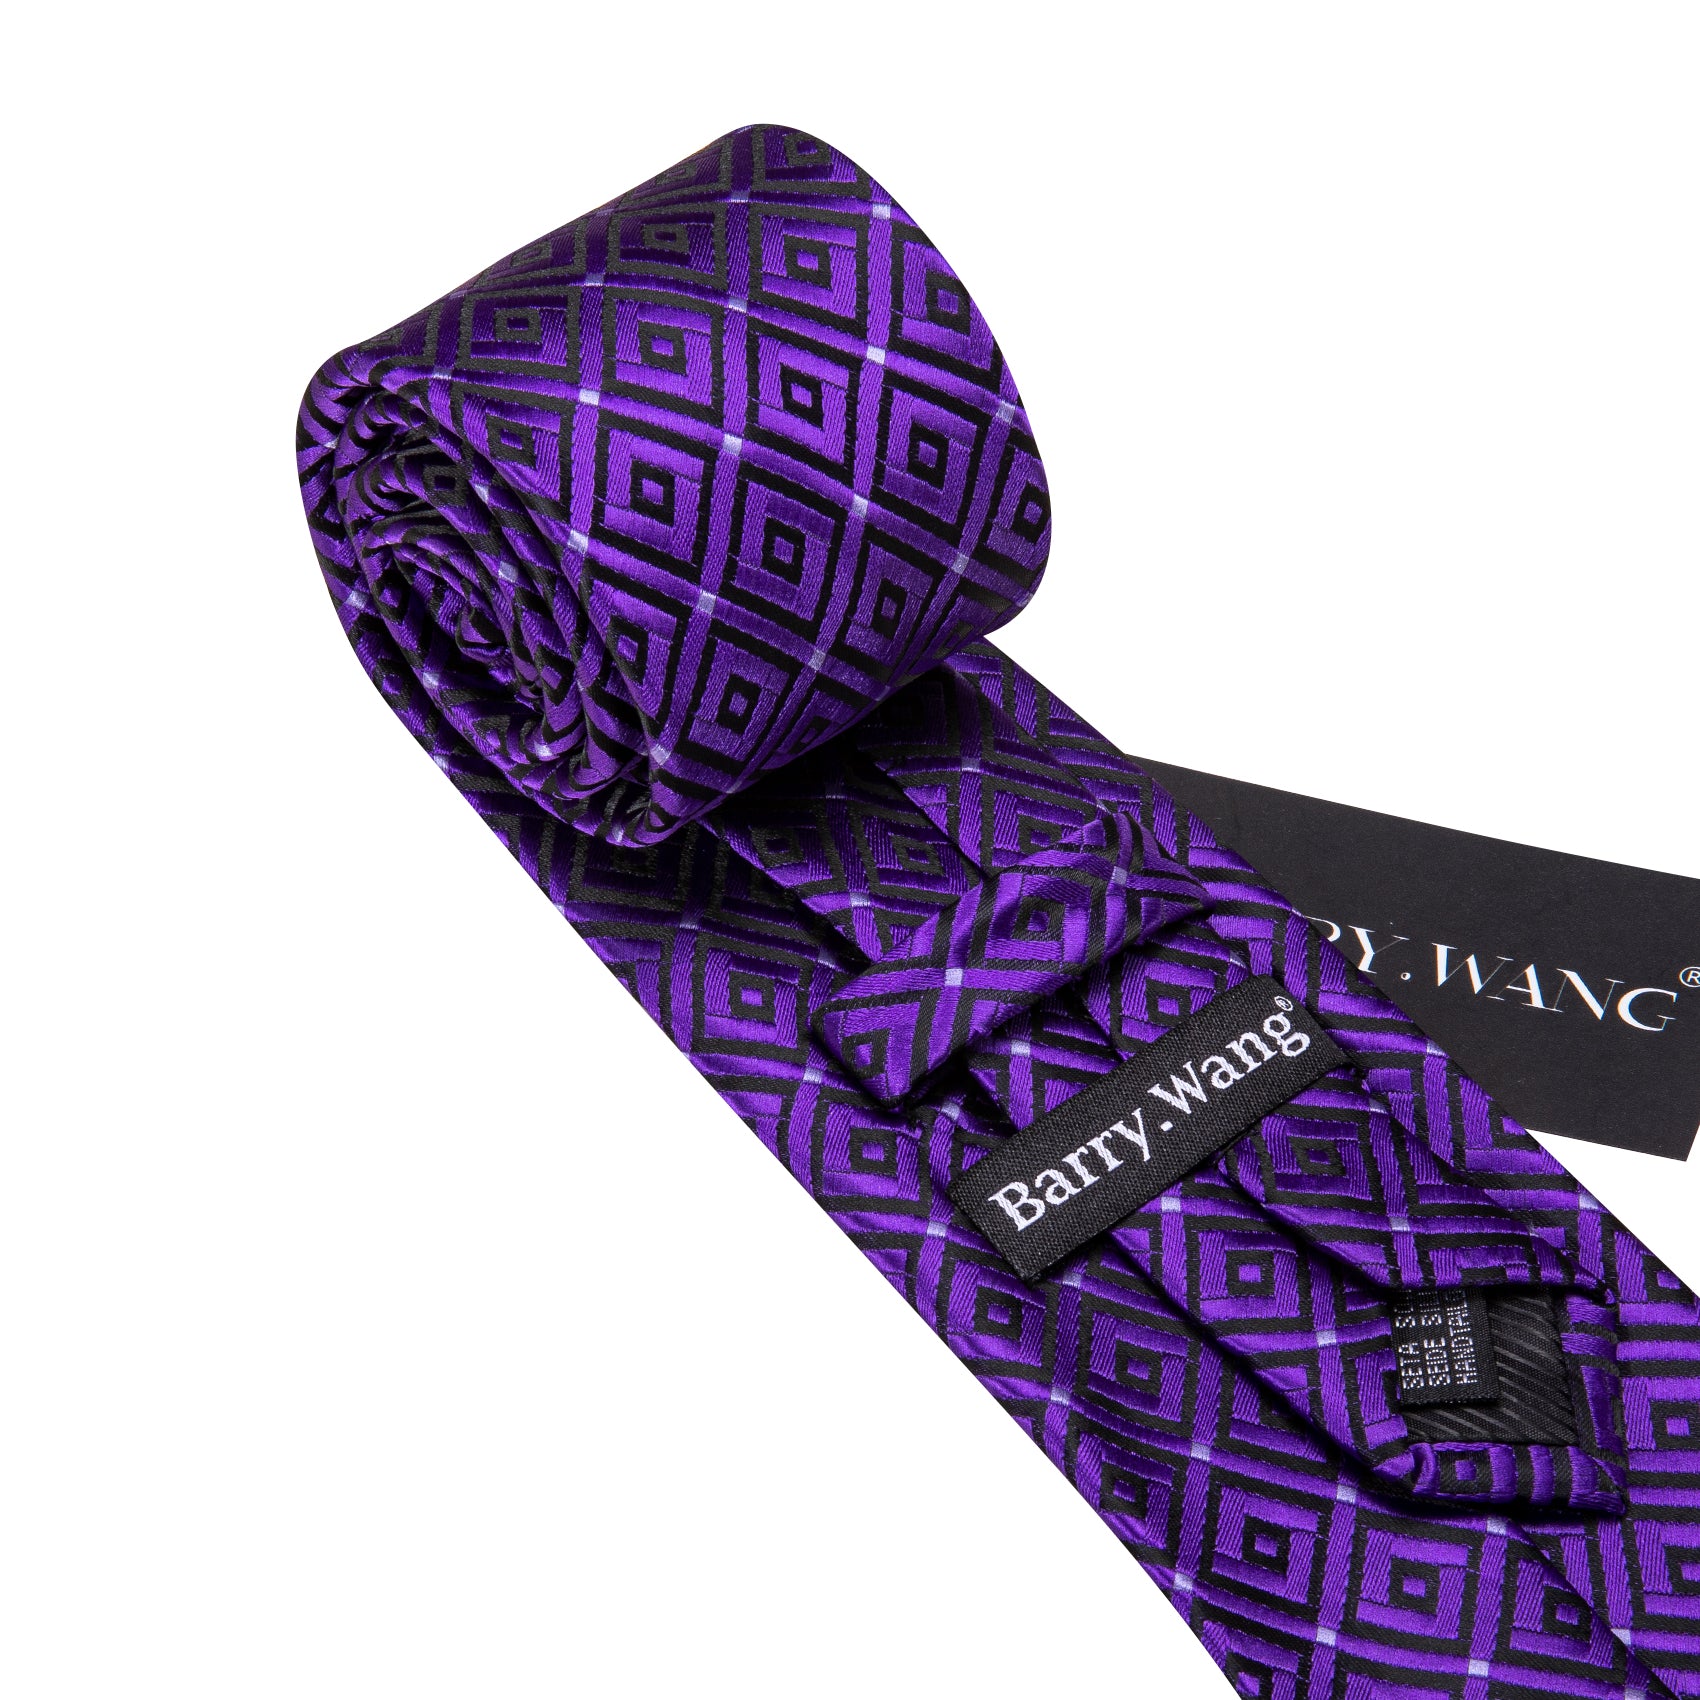 Novetly Hyacinth Plaid Silk Tie Handkerchief Cufflinks Set